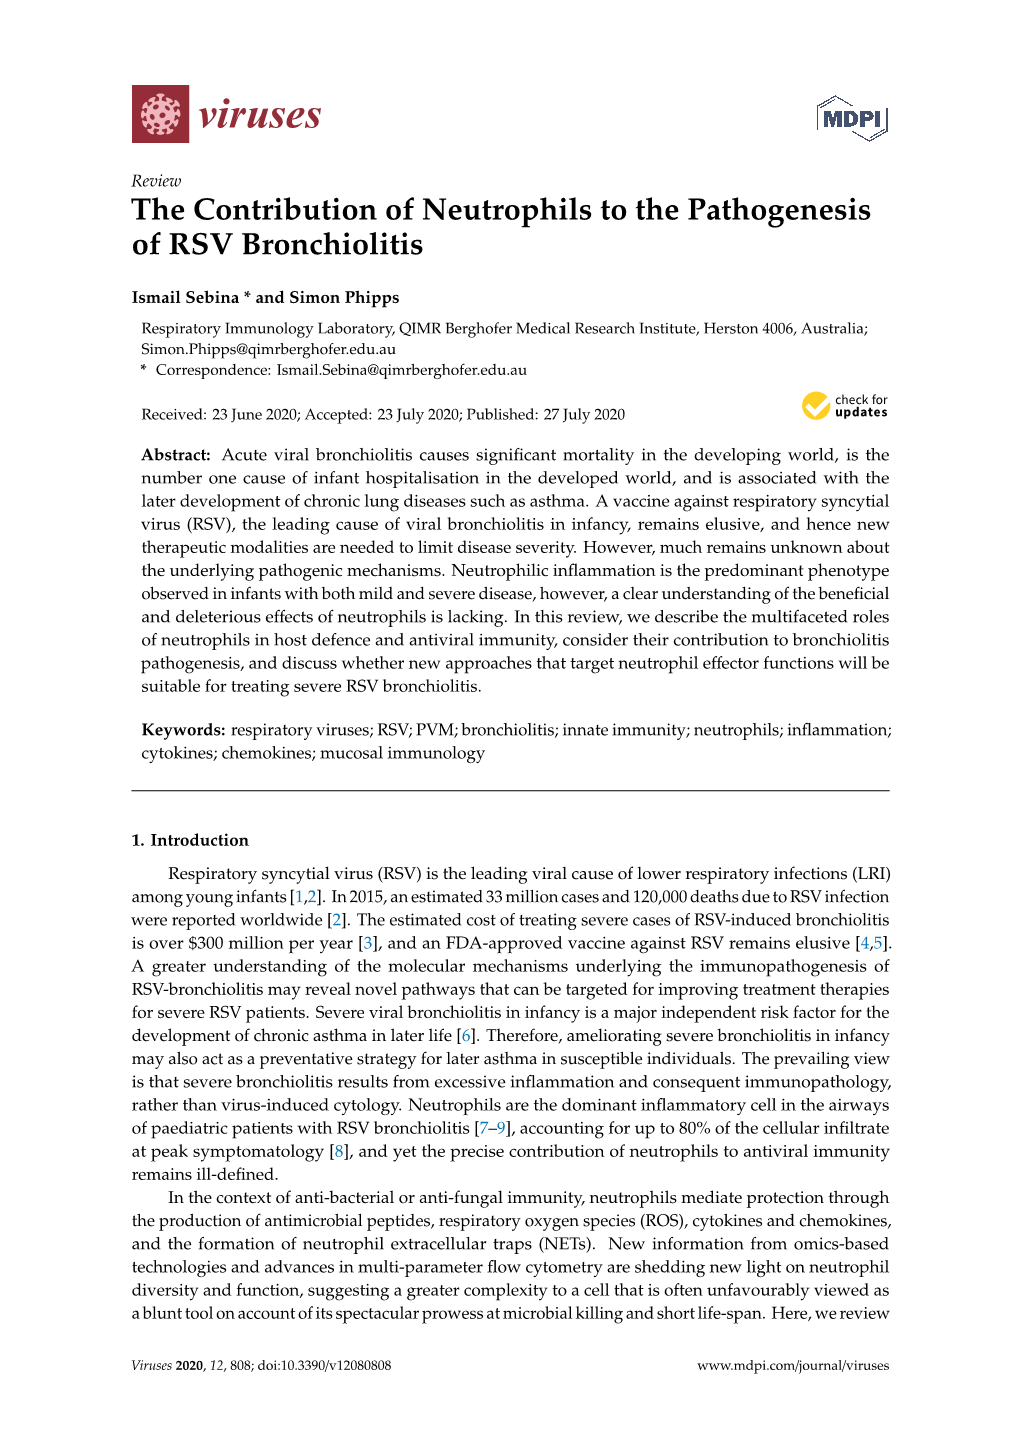 The Contribution of Neutrophils to the Pathogenesis of RSV Bronchiolitis